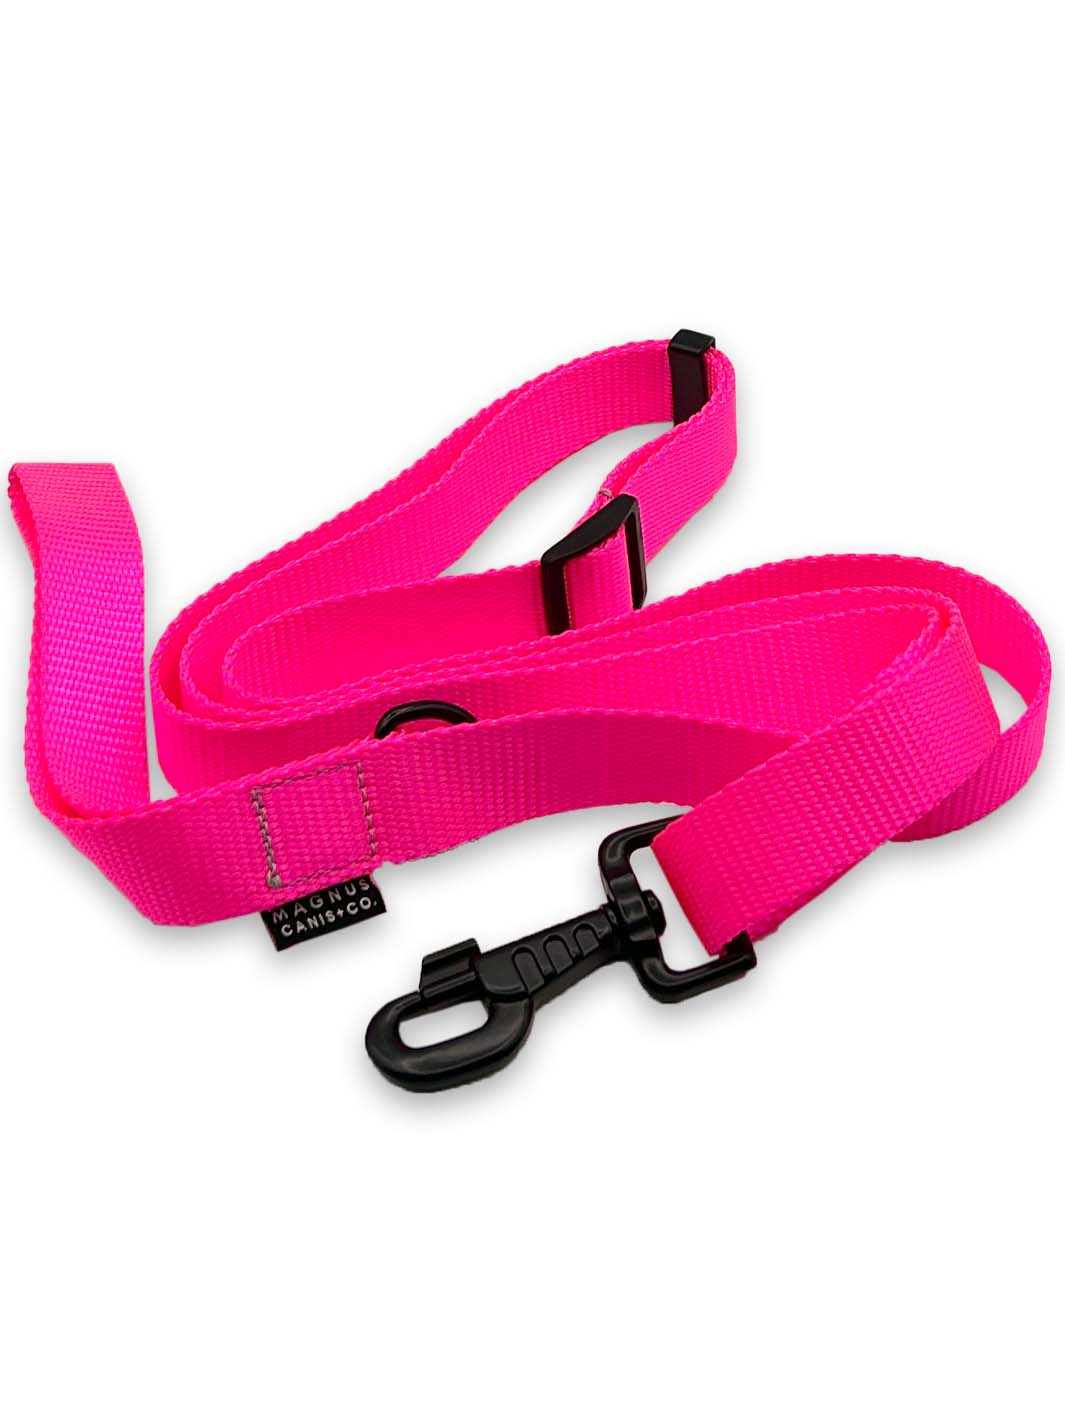 MAGNUS Canis neon pink nylon strap webbing dog leash bundled up.